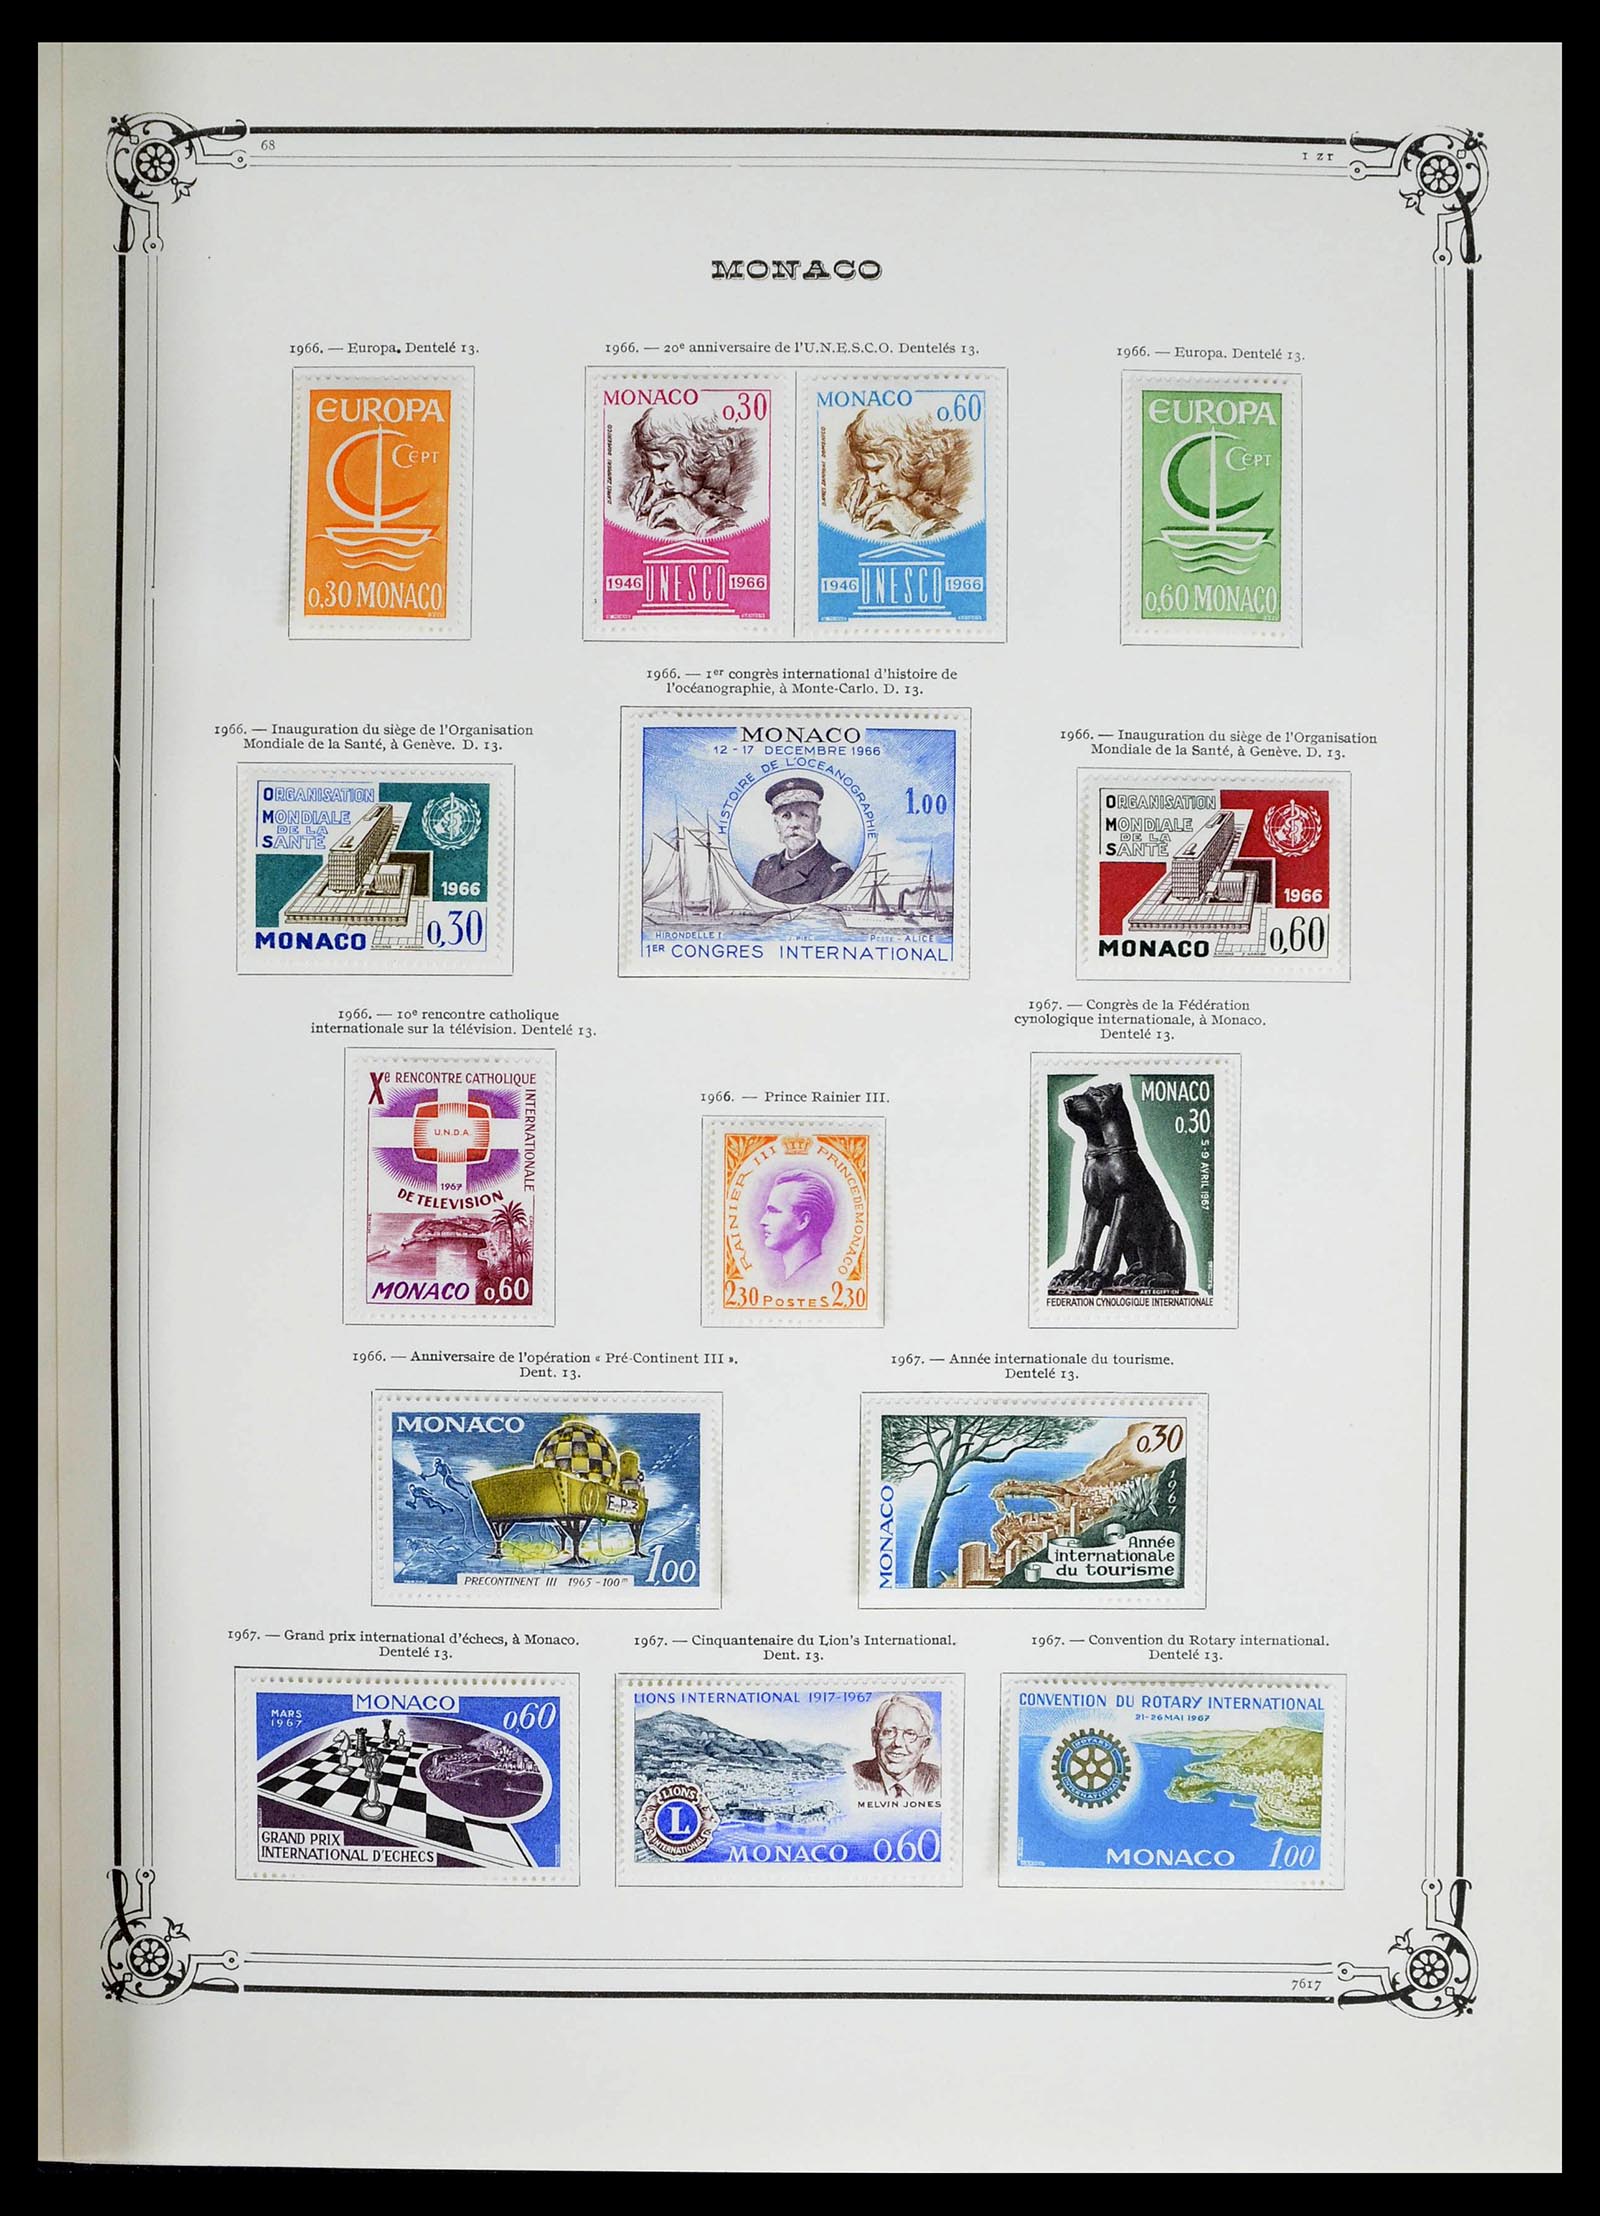 39133 0046 - Stamp collection 39133 Monaco 1885-1996.